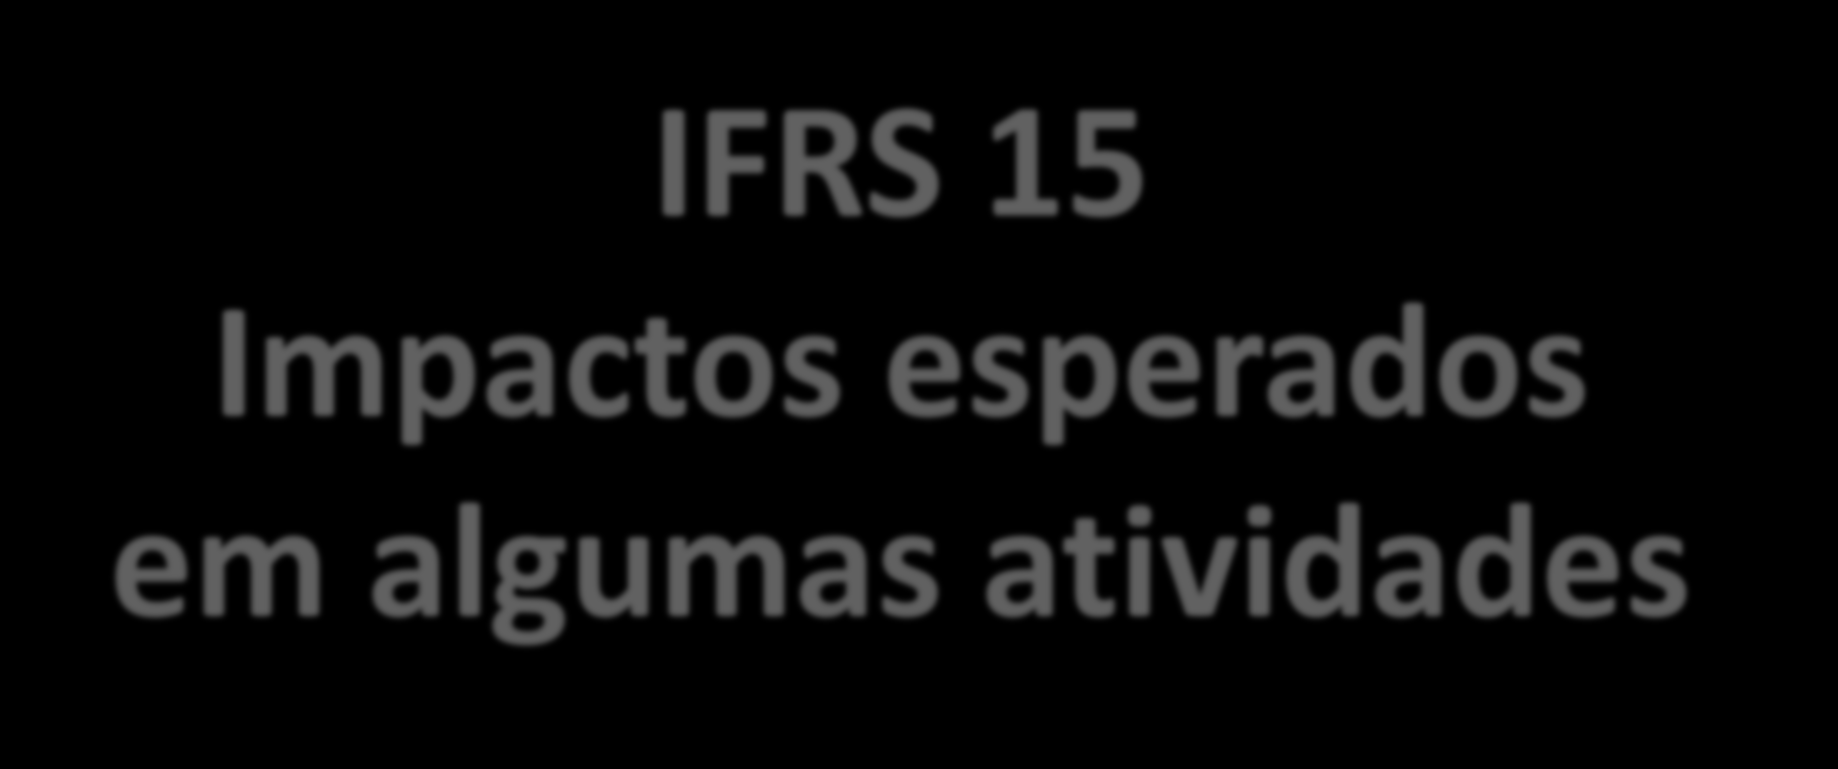 IFRS 15 Impactos